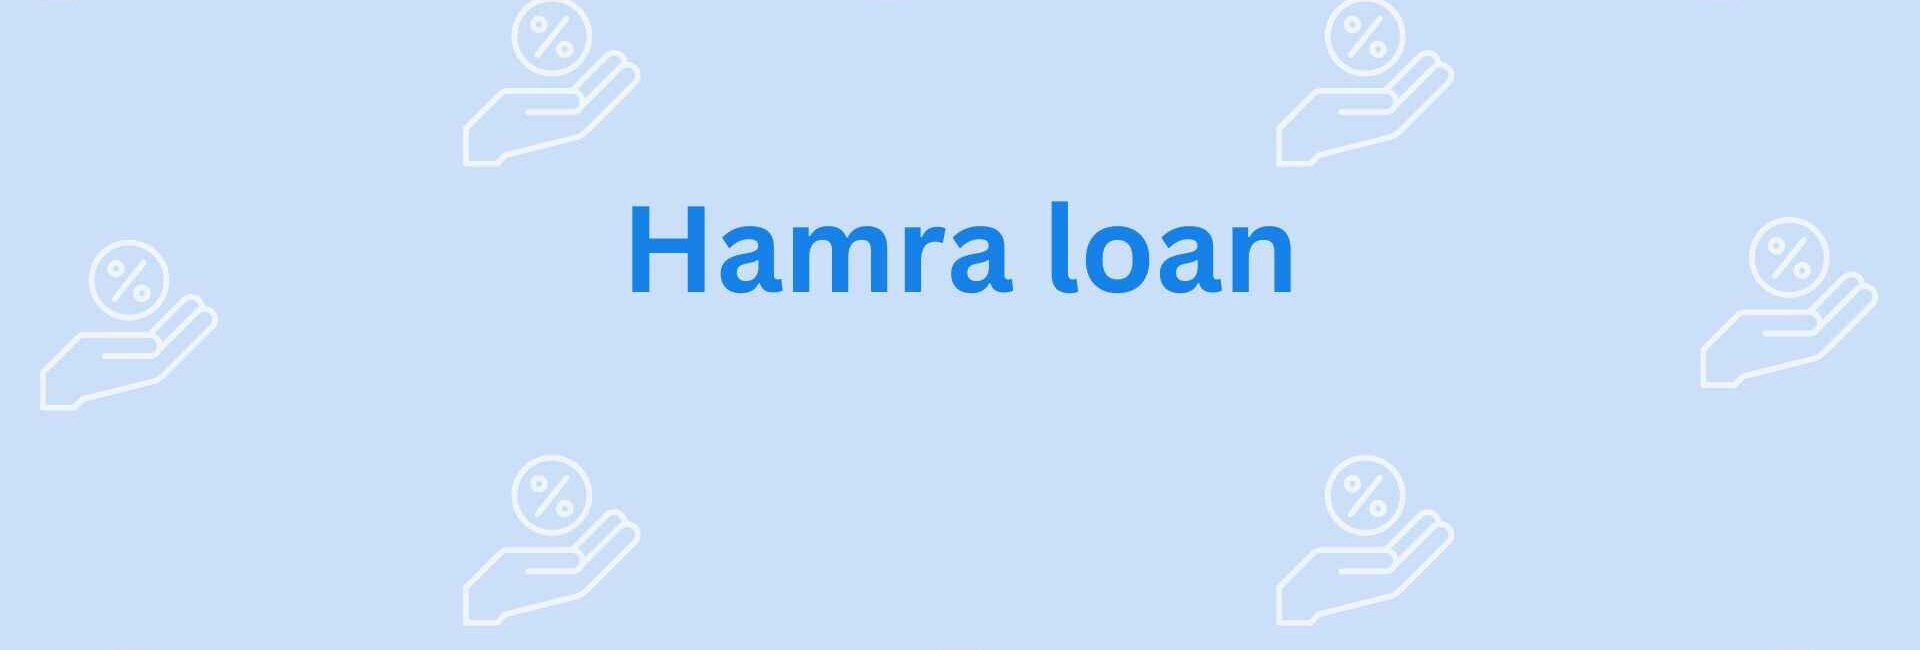 Hamra loan-Expert Help With Home Loans in Noida